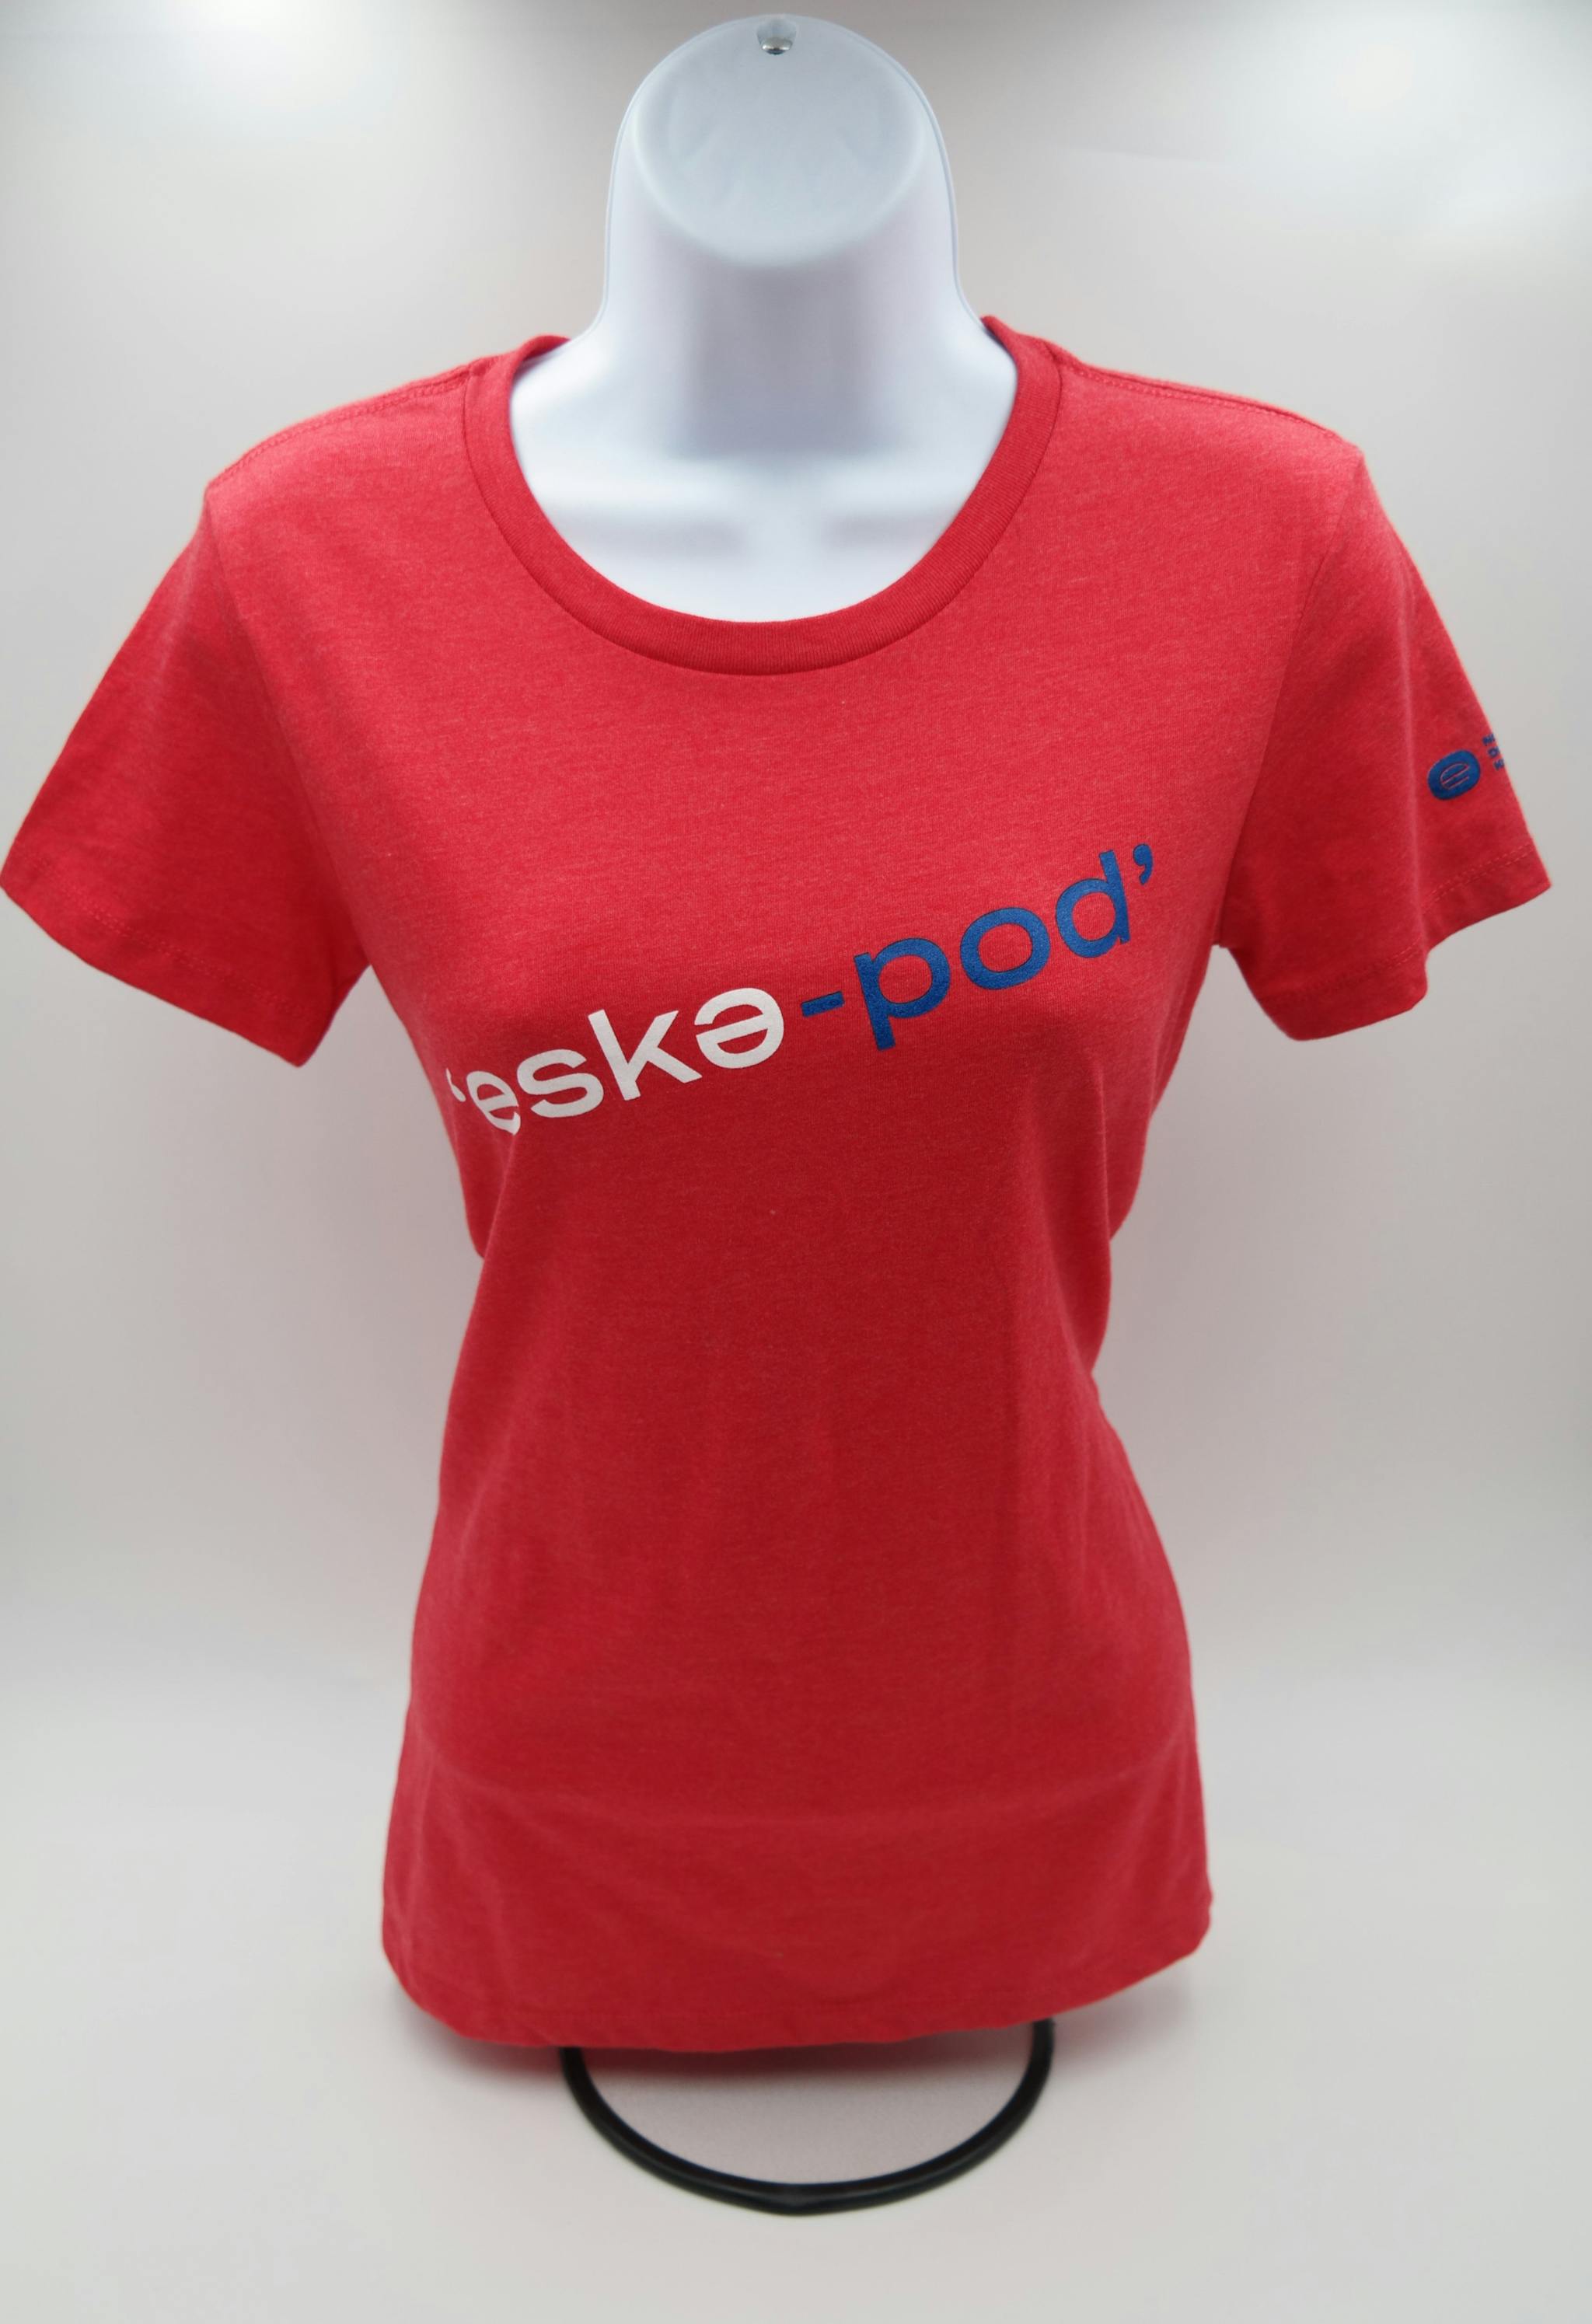 Women's 'eske-pod' T-Shirt Red